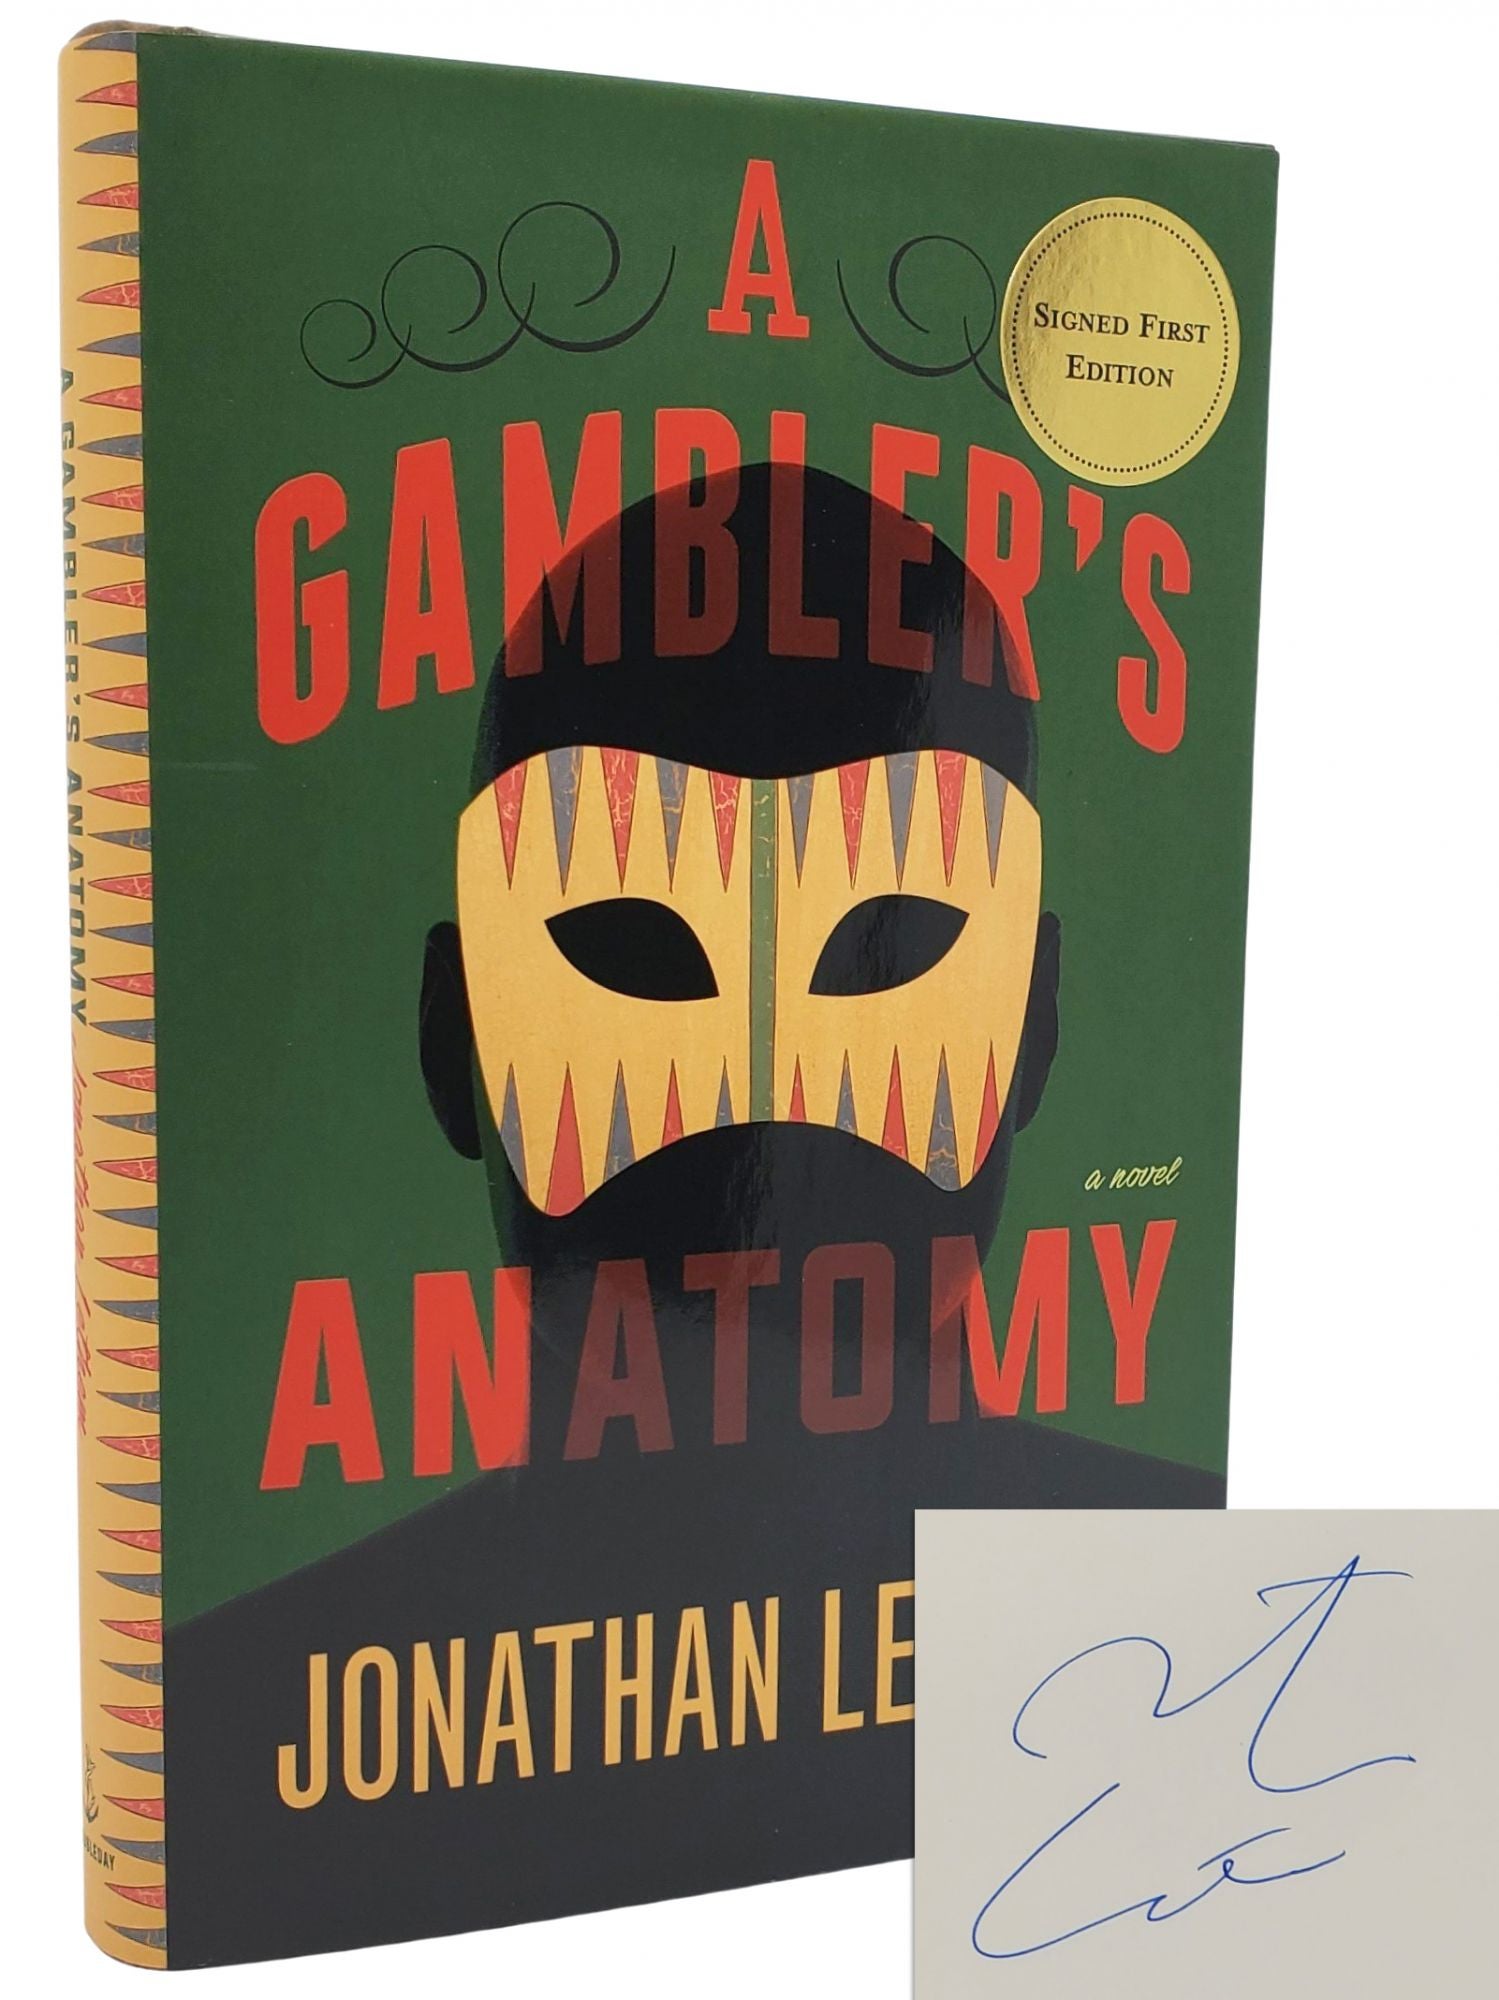 [Book #50499] A GAMBLER'S ANATOMY. Jonathan Lethem.